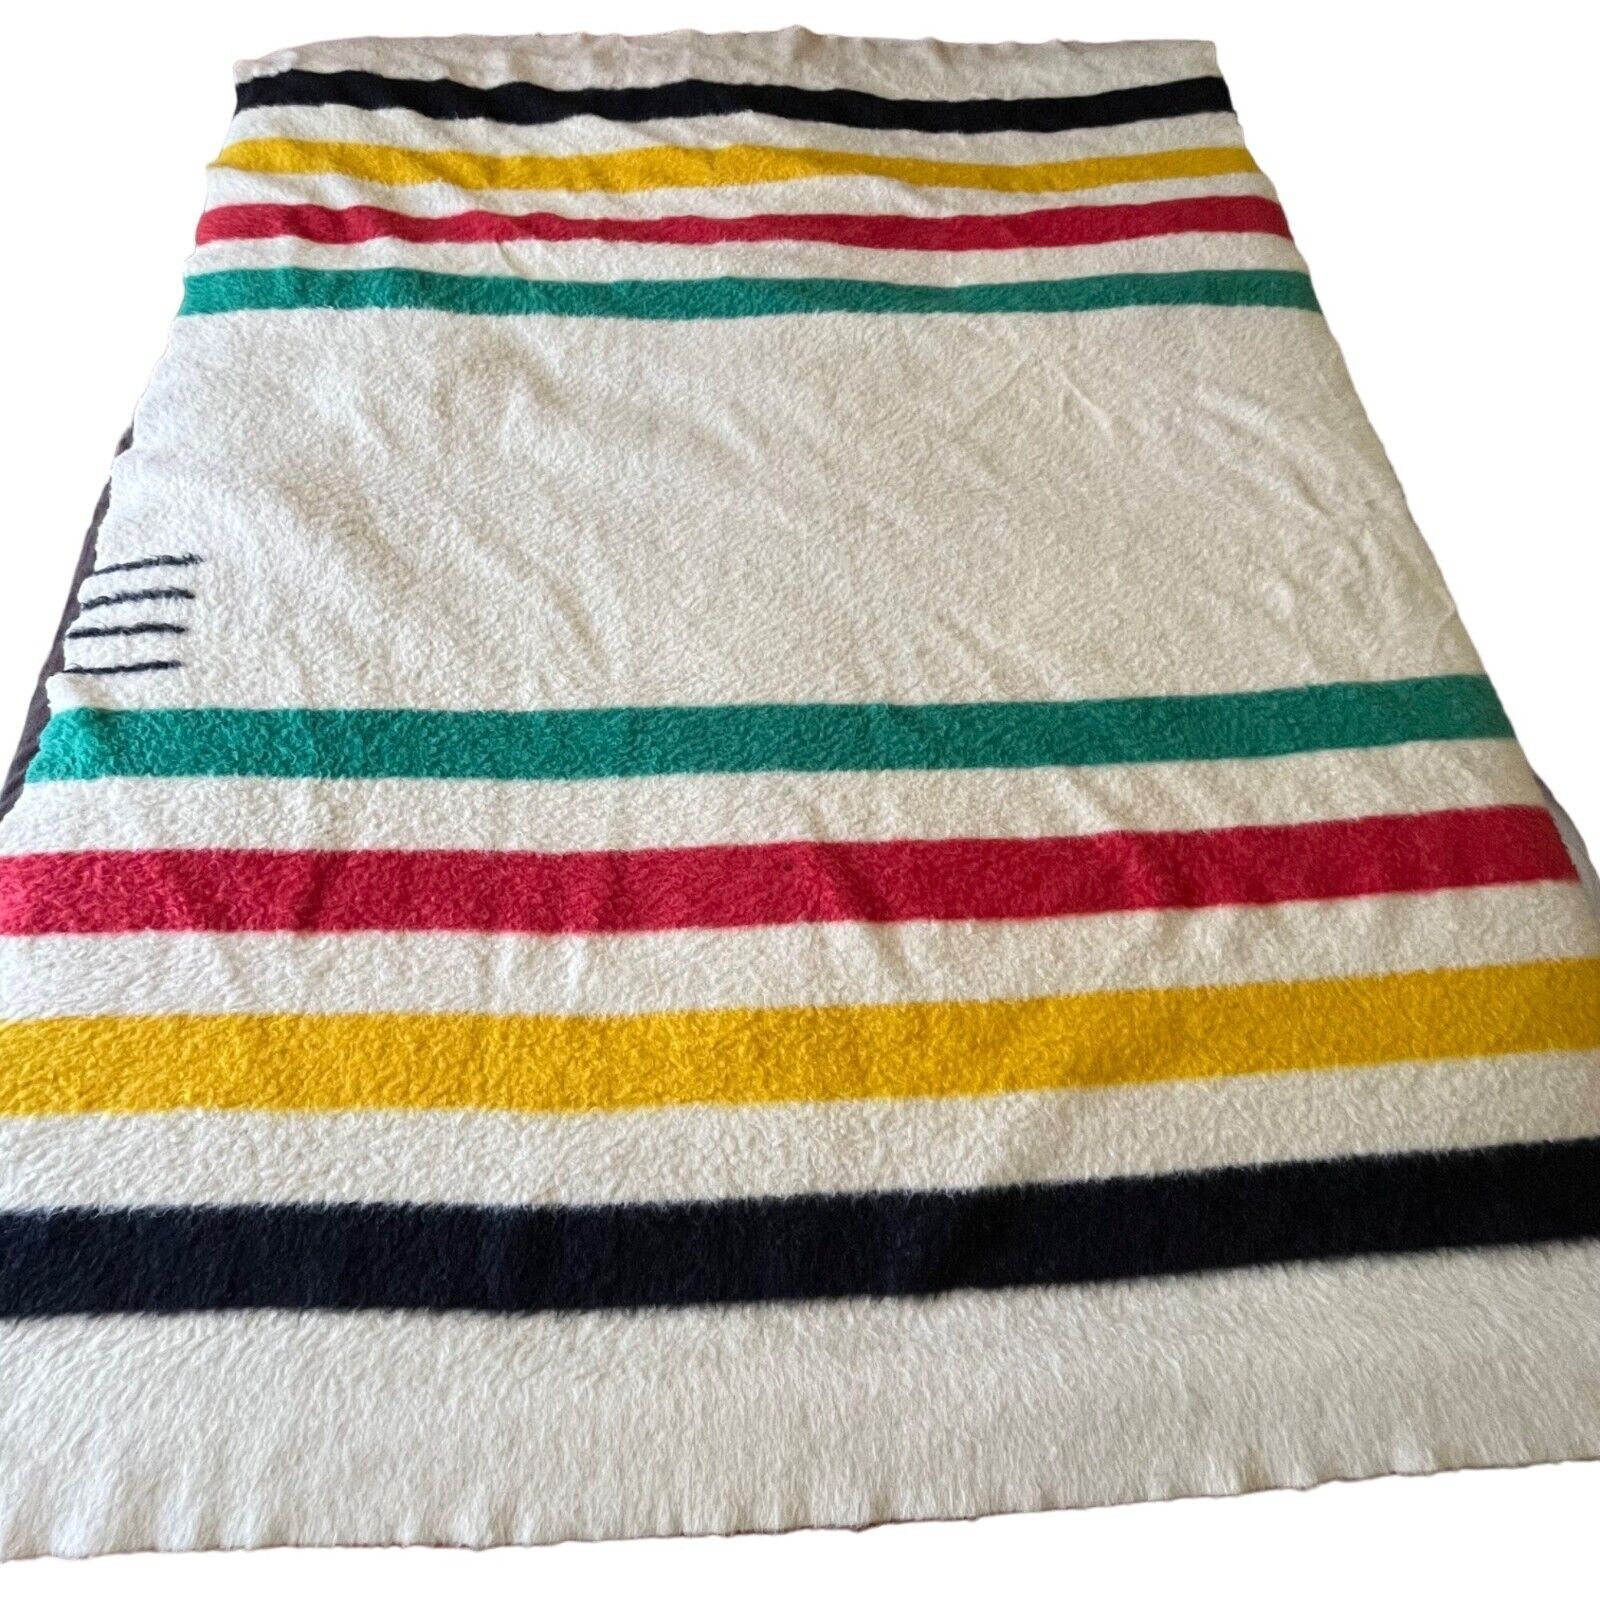 Vtg Hudsons Bay 4 Point Blanket 100% Wool Made England 90x70 Full size Striped